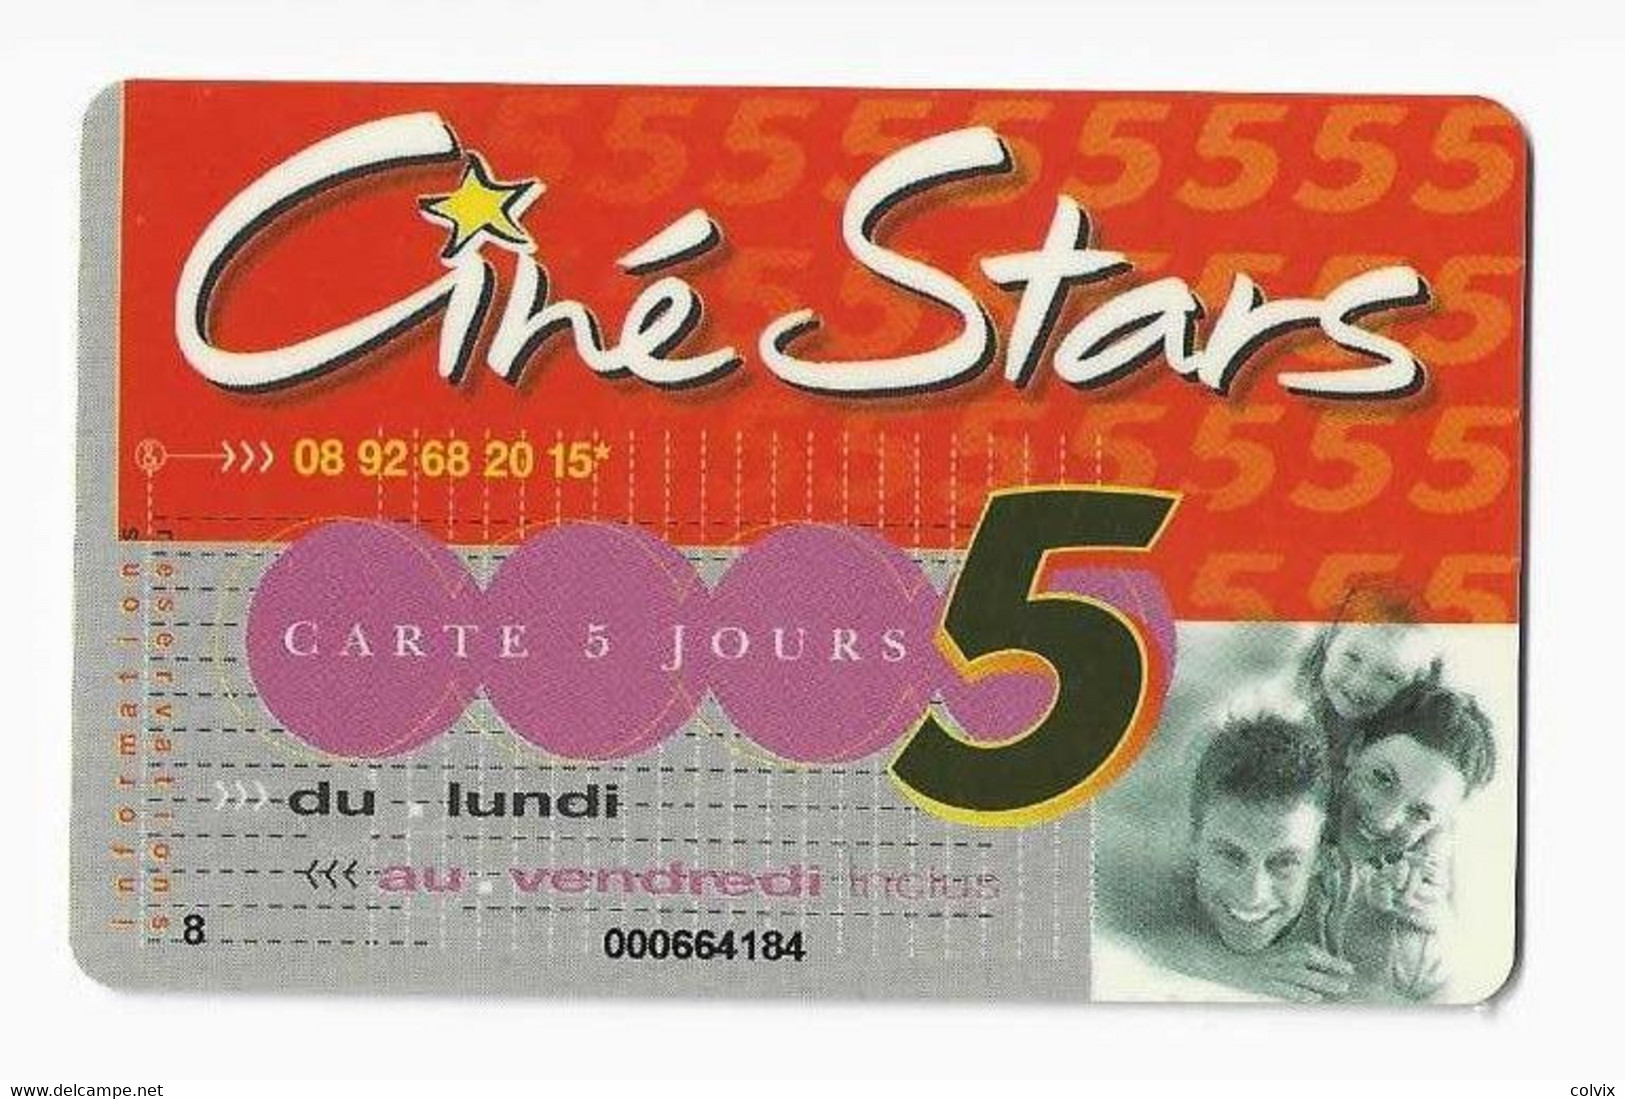 FRANCE CARTE CINEMA CINE STARS 5 JOURS - Bioscoopkaarten